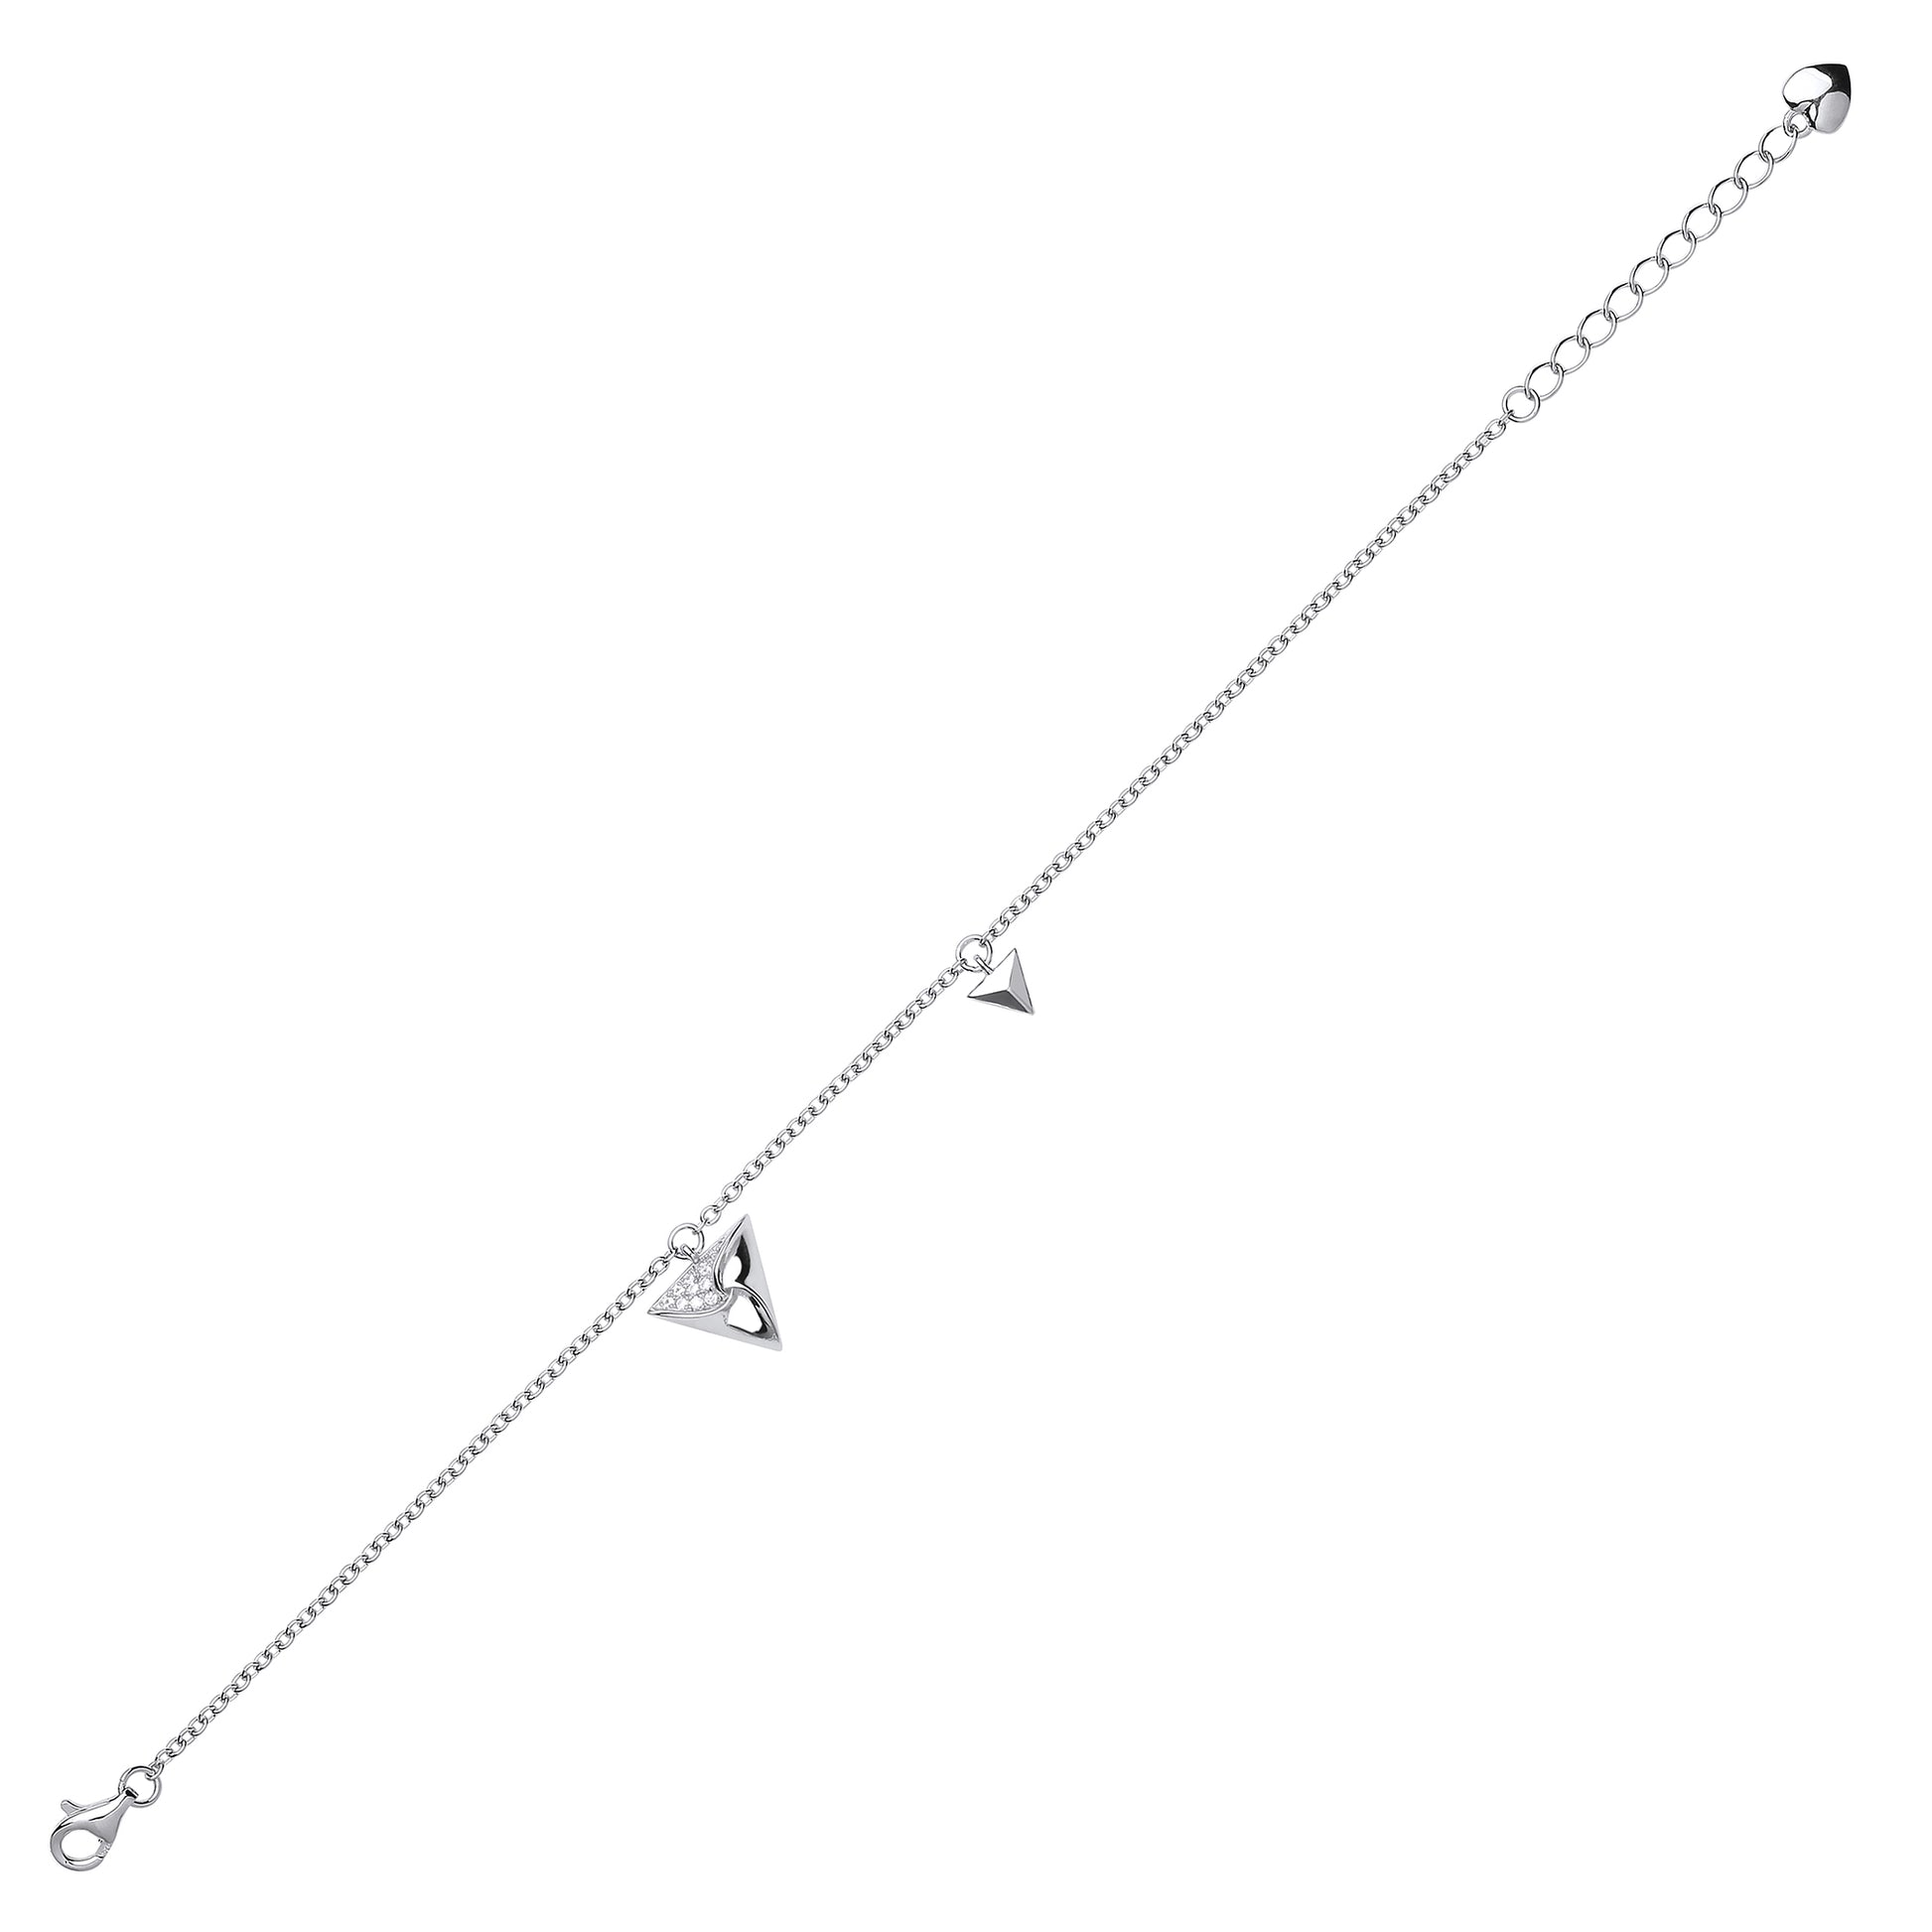 Silver  CZ Triangle Hamantaschen Charm Bracelet 6.5 inch - GVB427